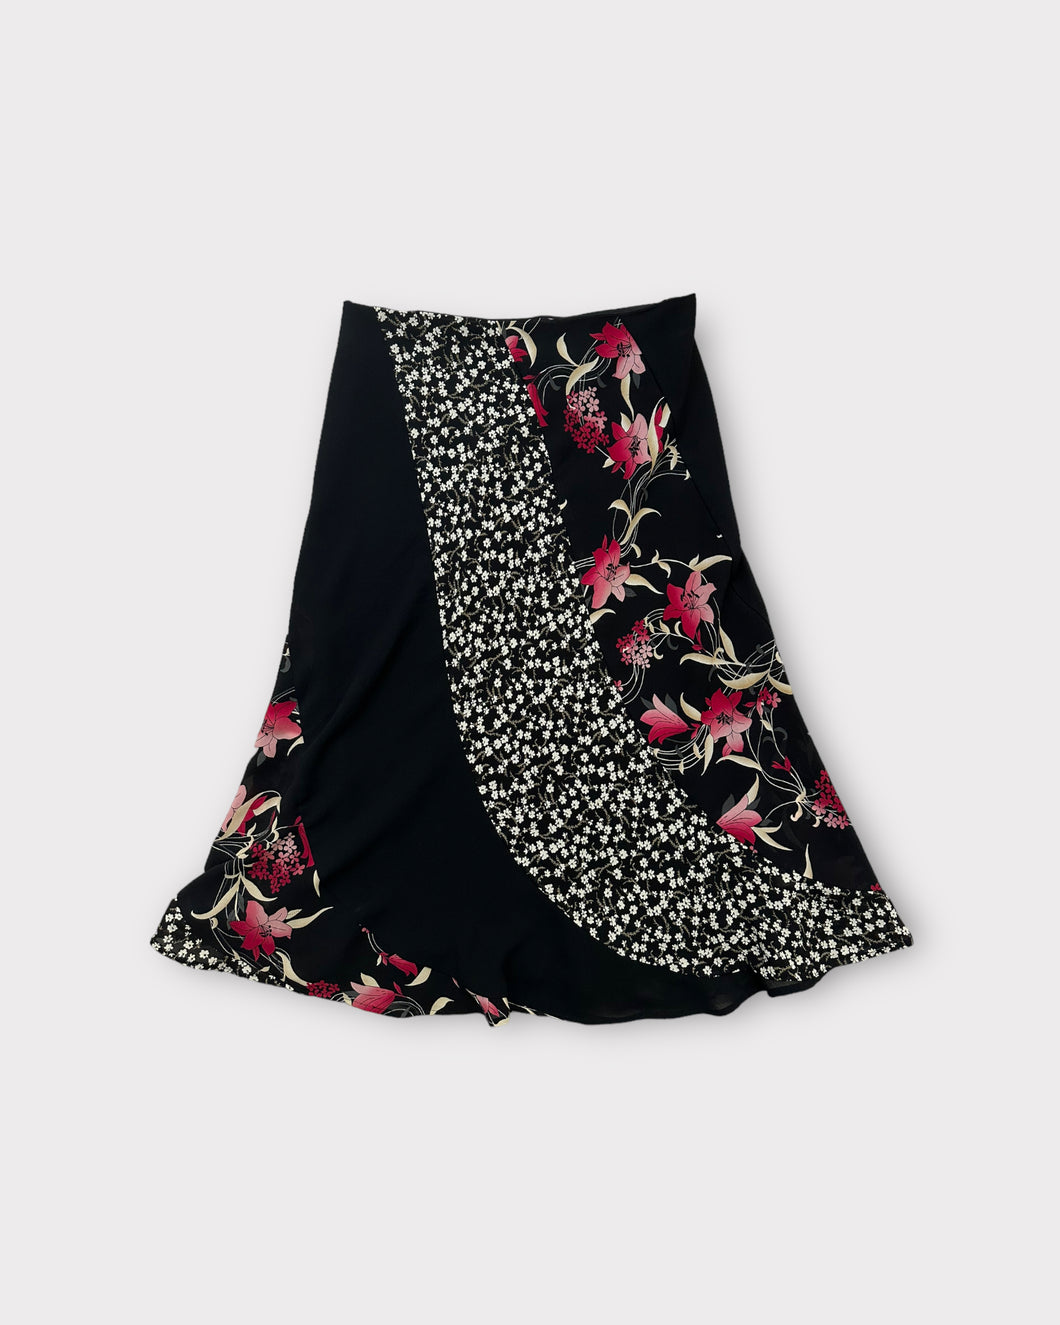 Axcess by Liz Claiborne Floral Midi Skirt (6)